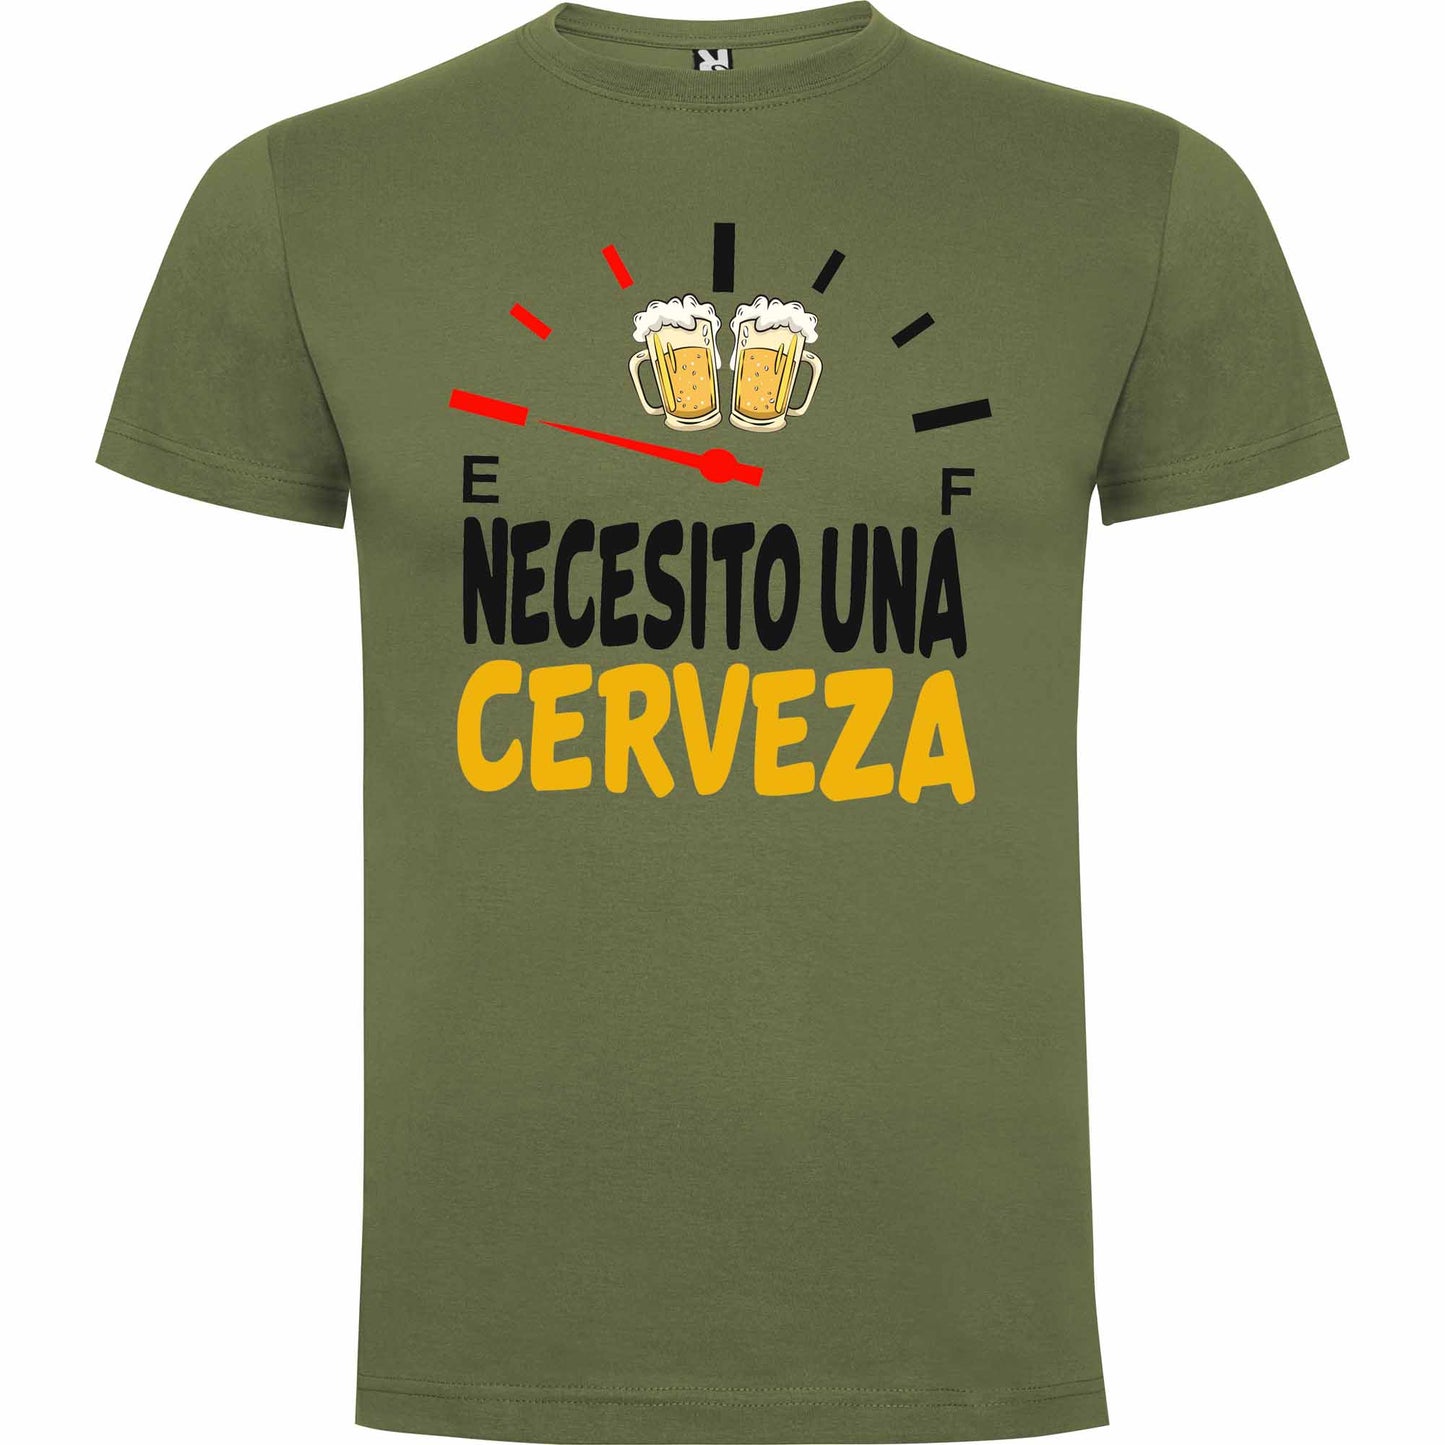 Camiseta personalizada necesito una cerveza